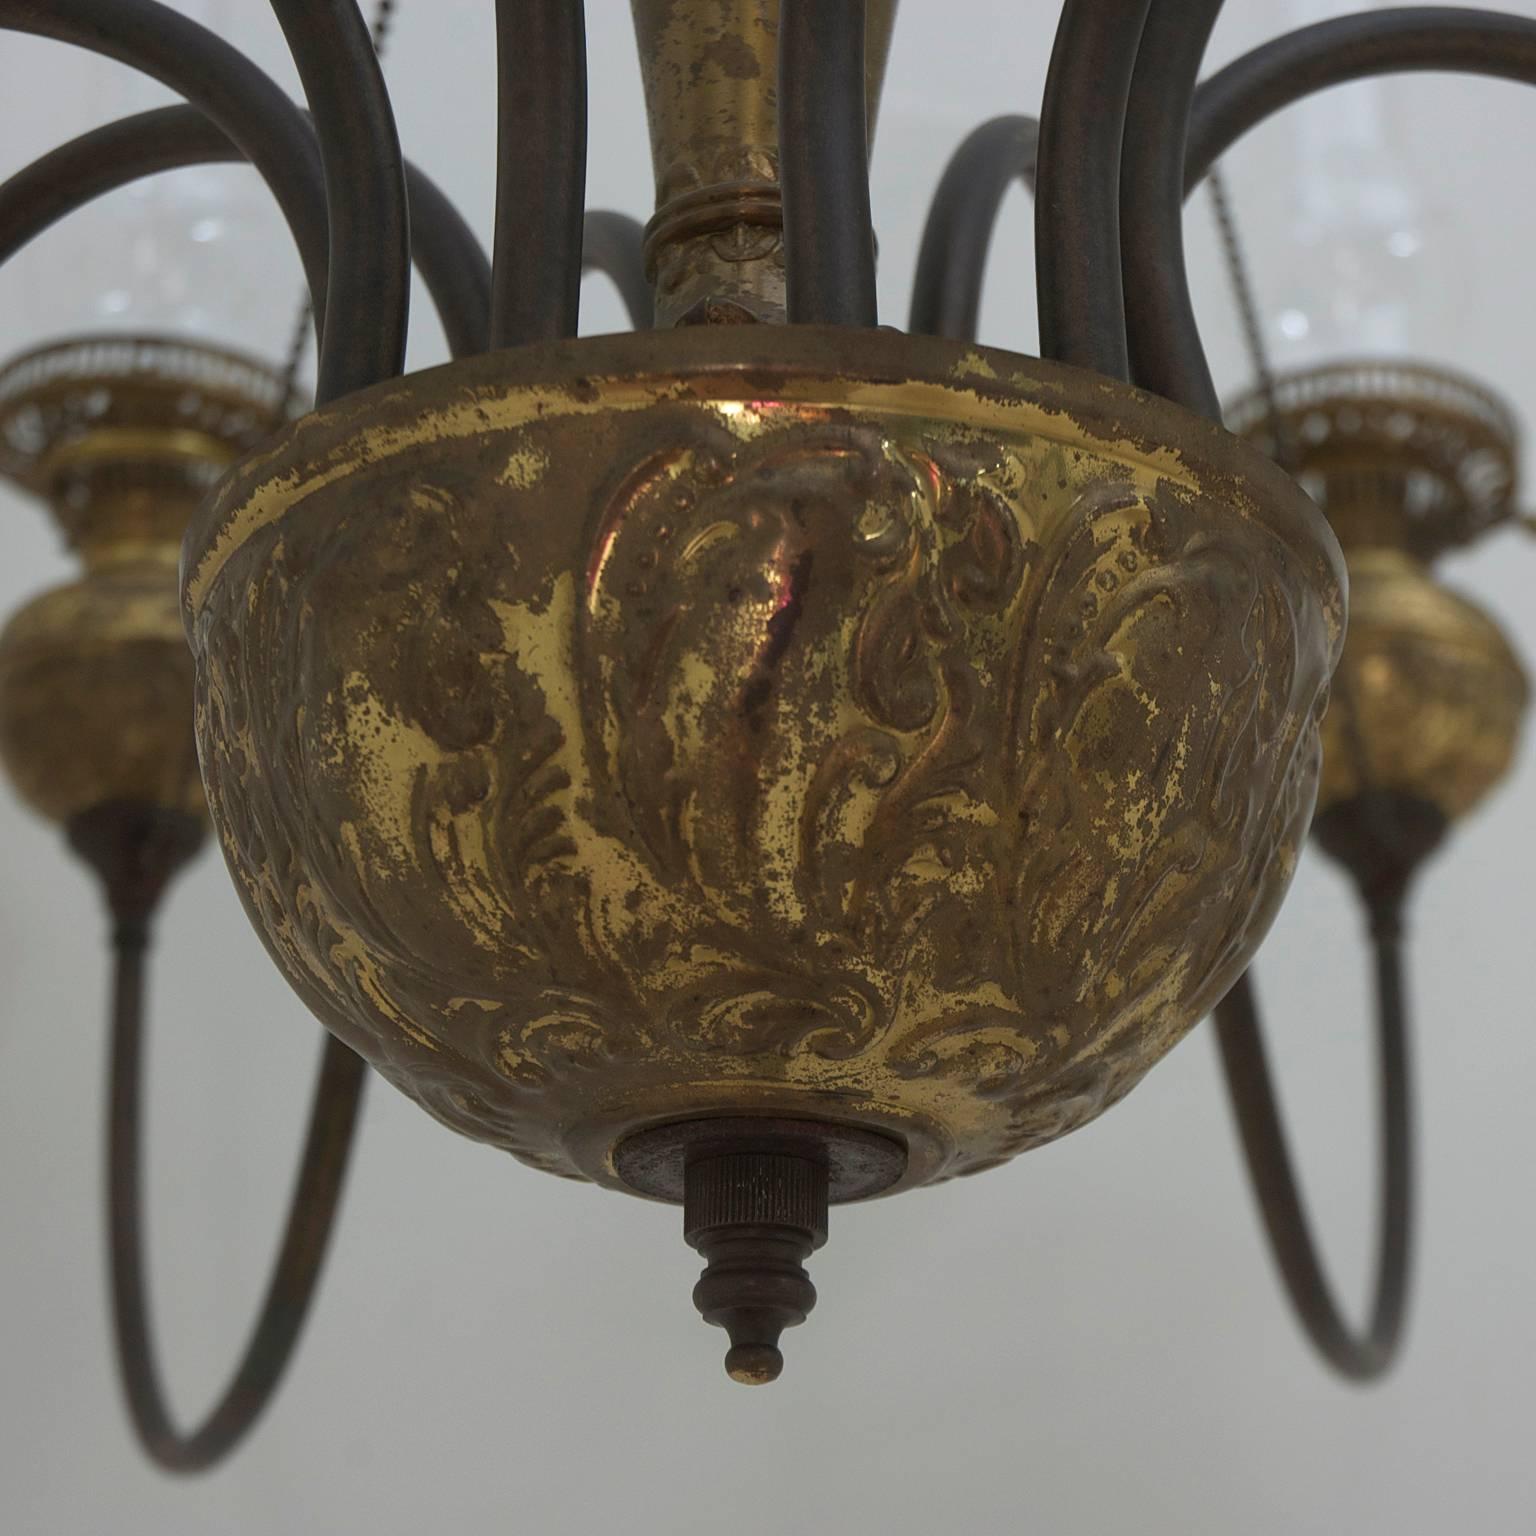 Hammered English Victorian Ten-Light Chandelier in Brass with Glass Chimneys, circa 1870